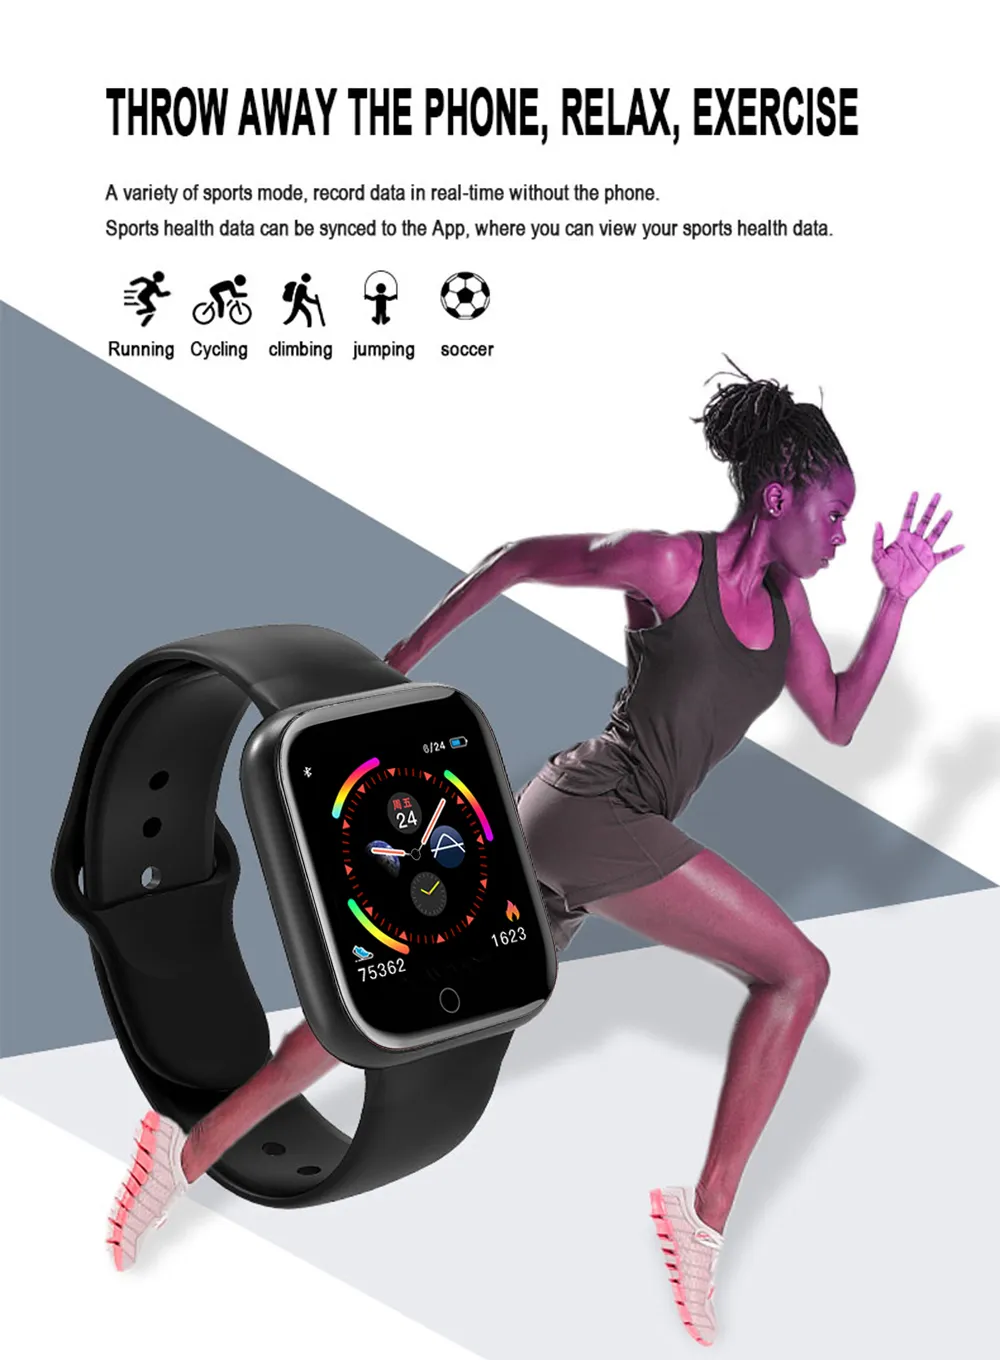 I5 Nouveau étanche intelligente Smart Watch Femmes Bluetooth Smartwatch pour Apple iPhone Xiaomi Heart Monitor Tracker Fitness Tracker PK P70 P68G8086766